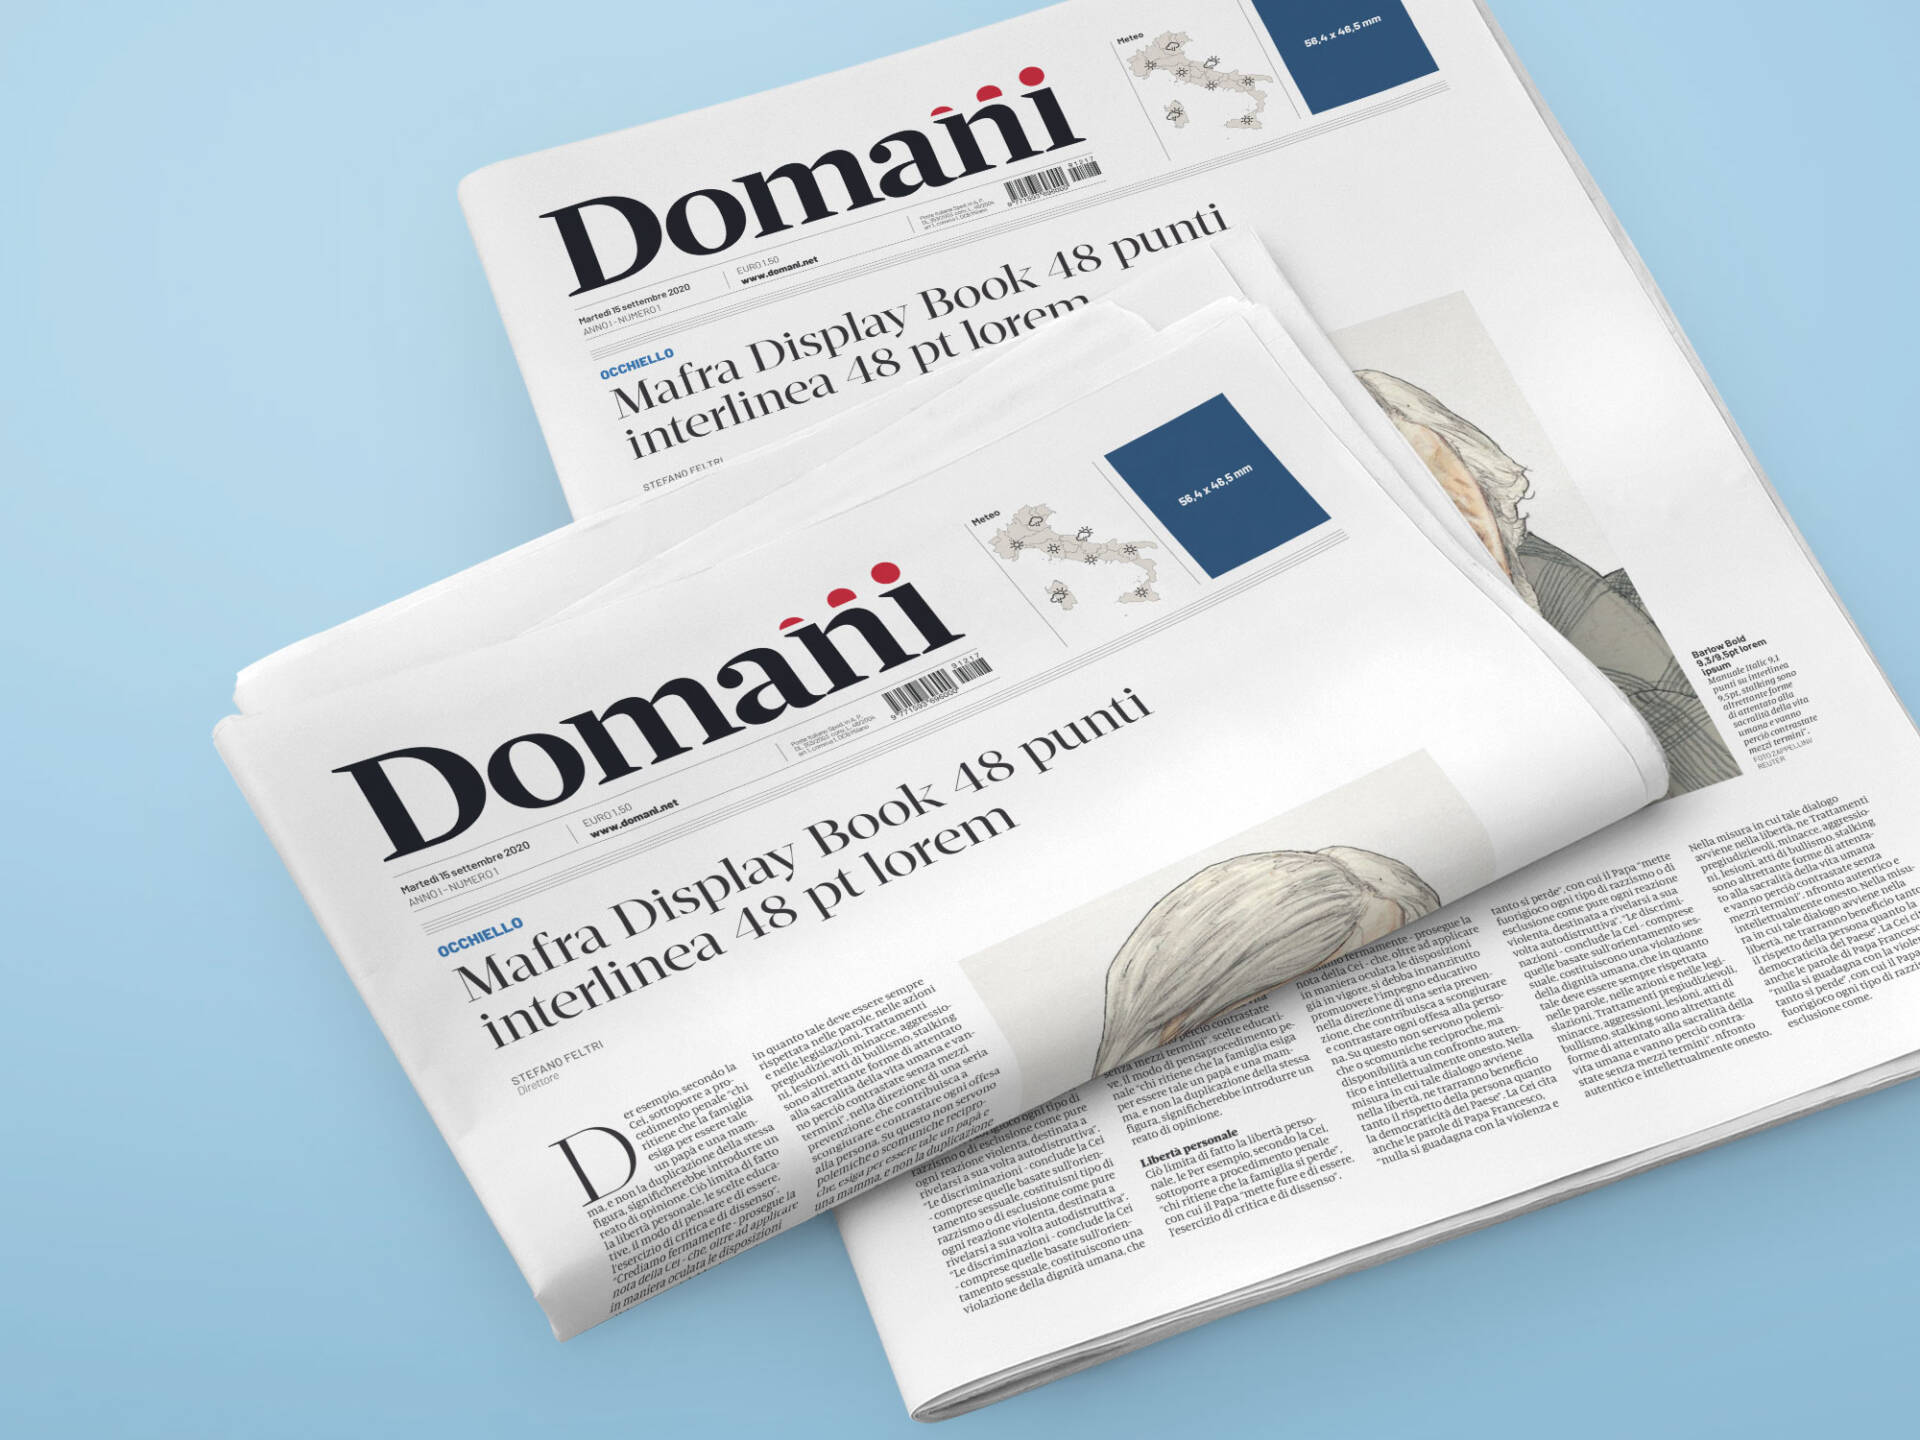 Domani_Print_Frontpage_Wenceslau_News_Design05